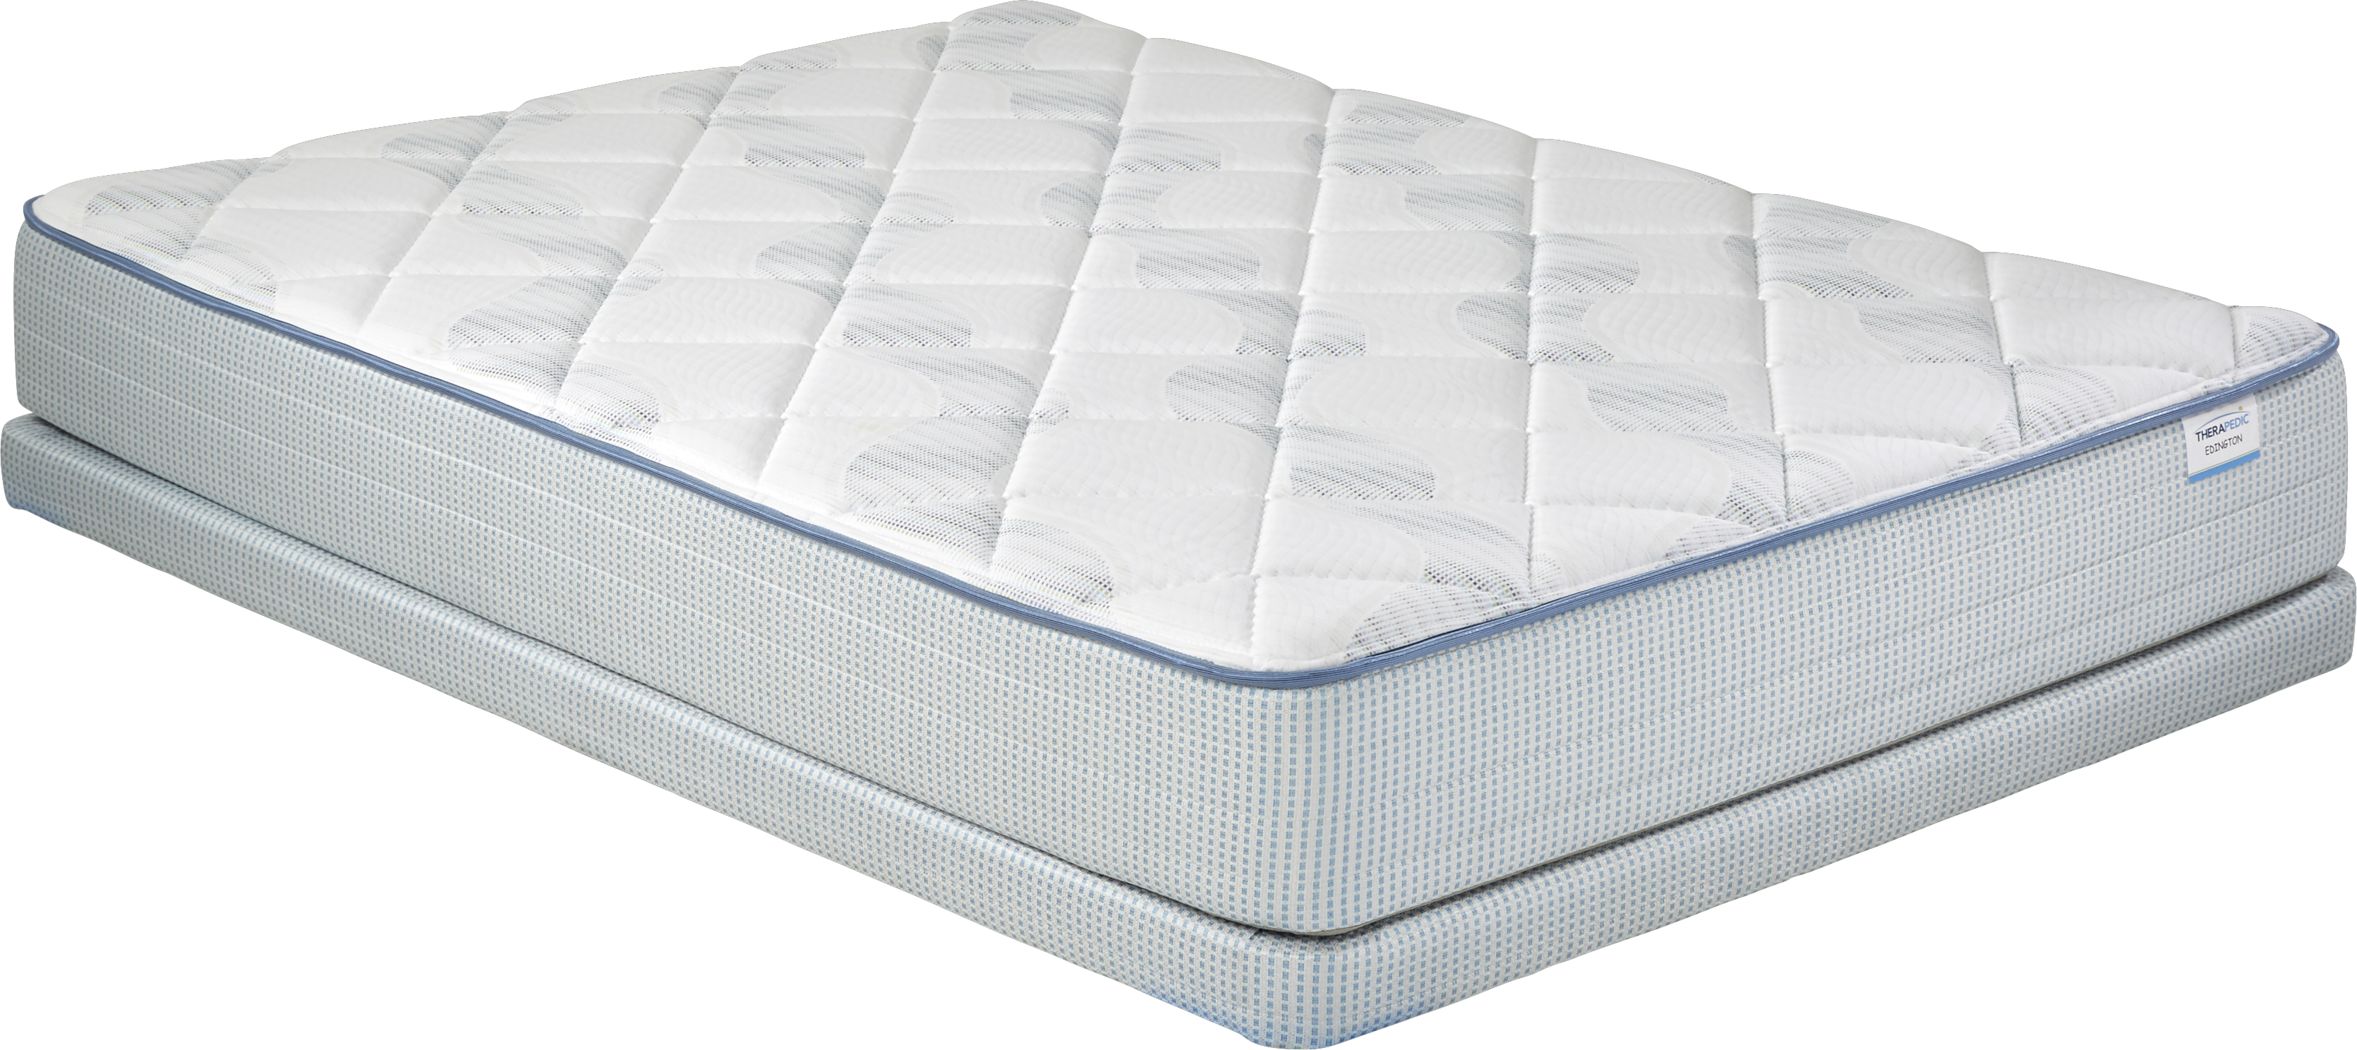 therapedic allington low profile king mattress set